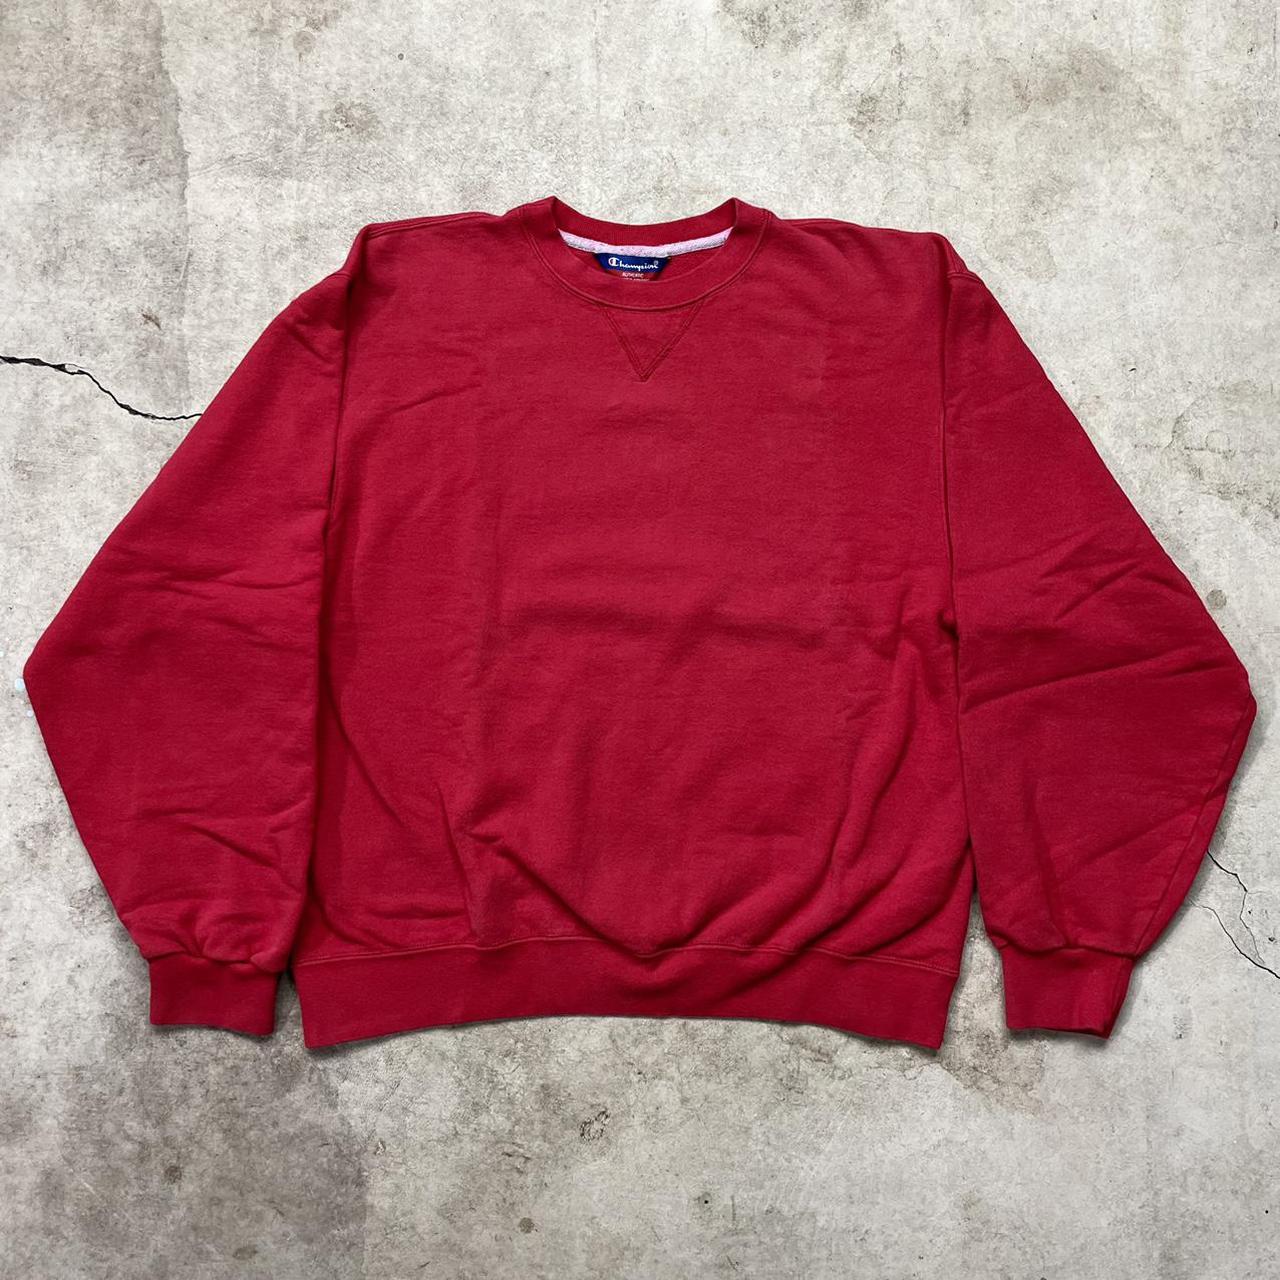 Product Image 1 - Vintage 90s Champion Crewneck Sweatshirt
Size